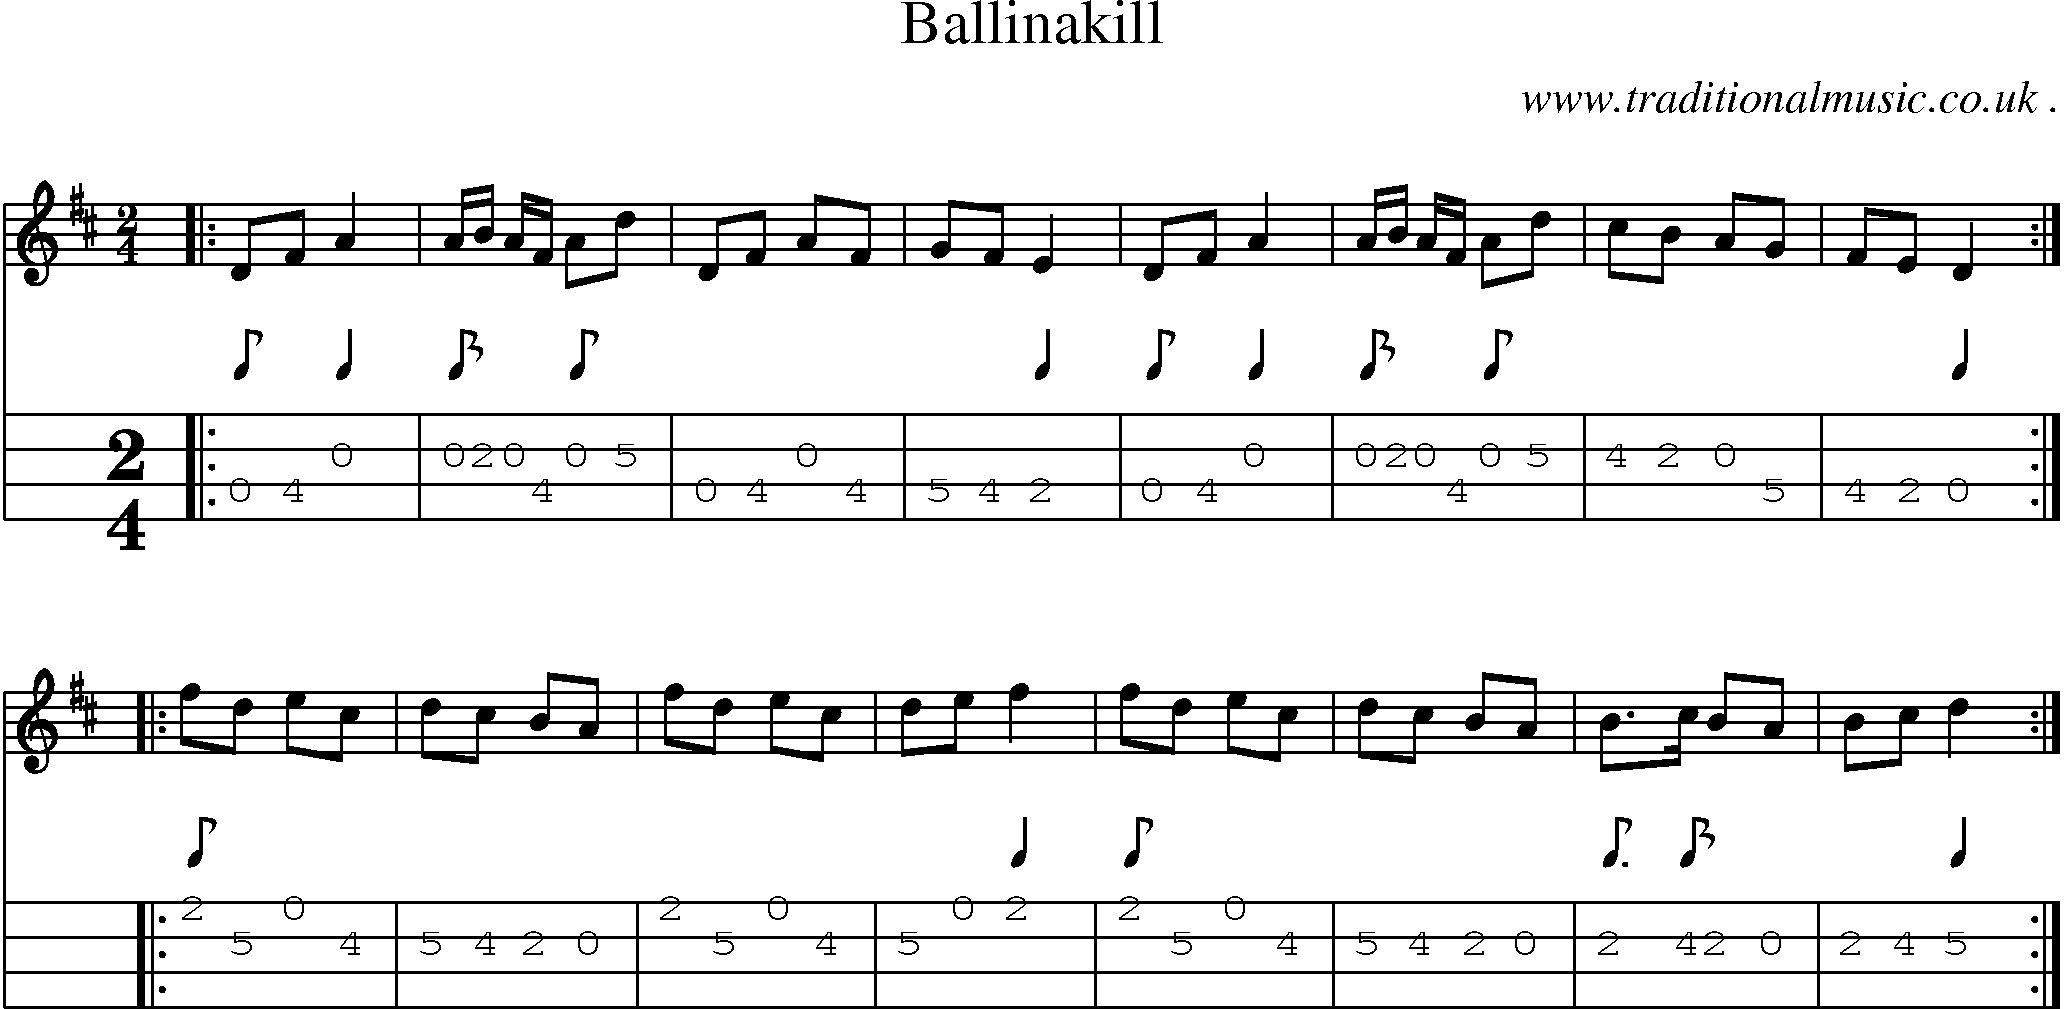 Sheet-Music and Mandolin Tabs for Ballinakill